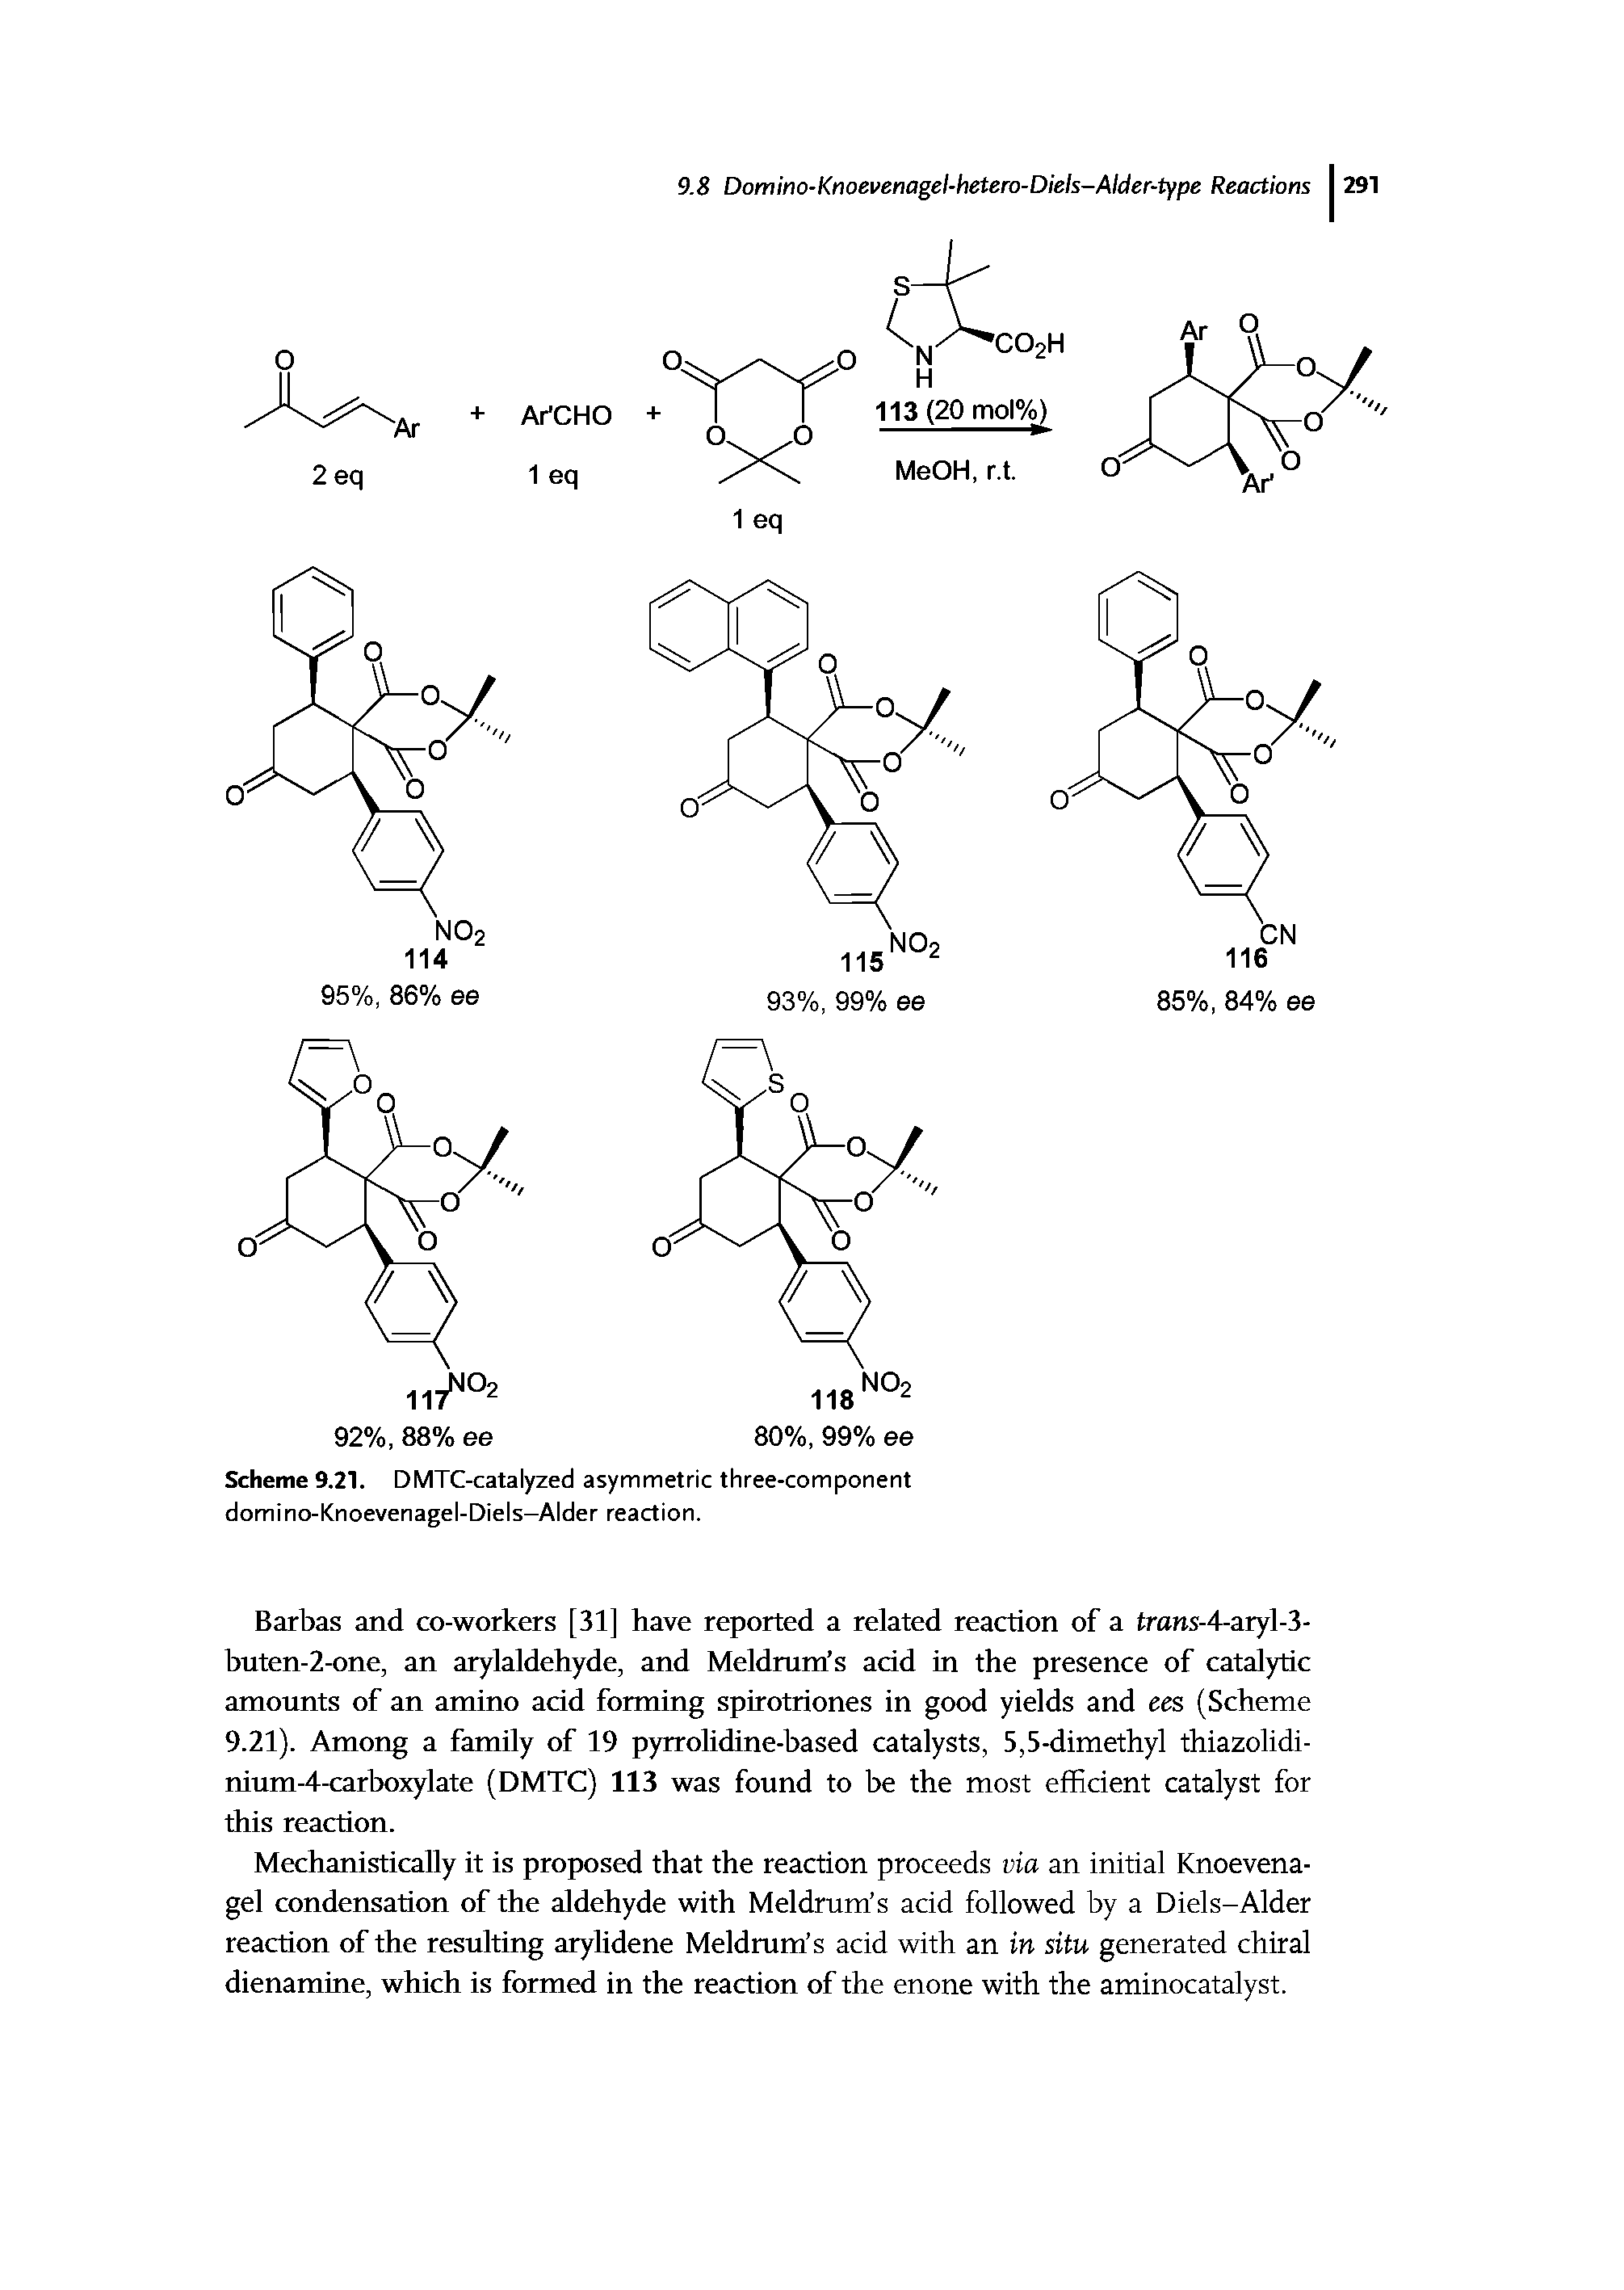 Scheme 9.21. DMTC-catalyzed asymmetric three-component domino-Knoevenagel-Diels—Alder reaction.